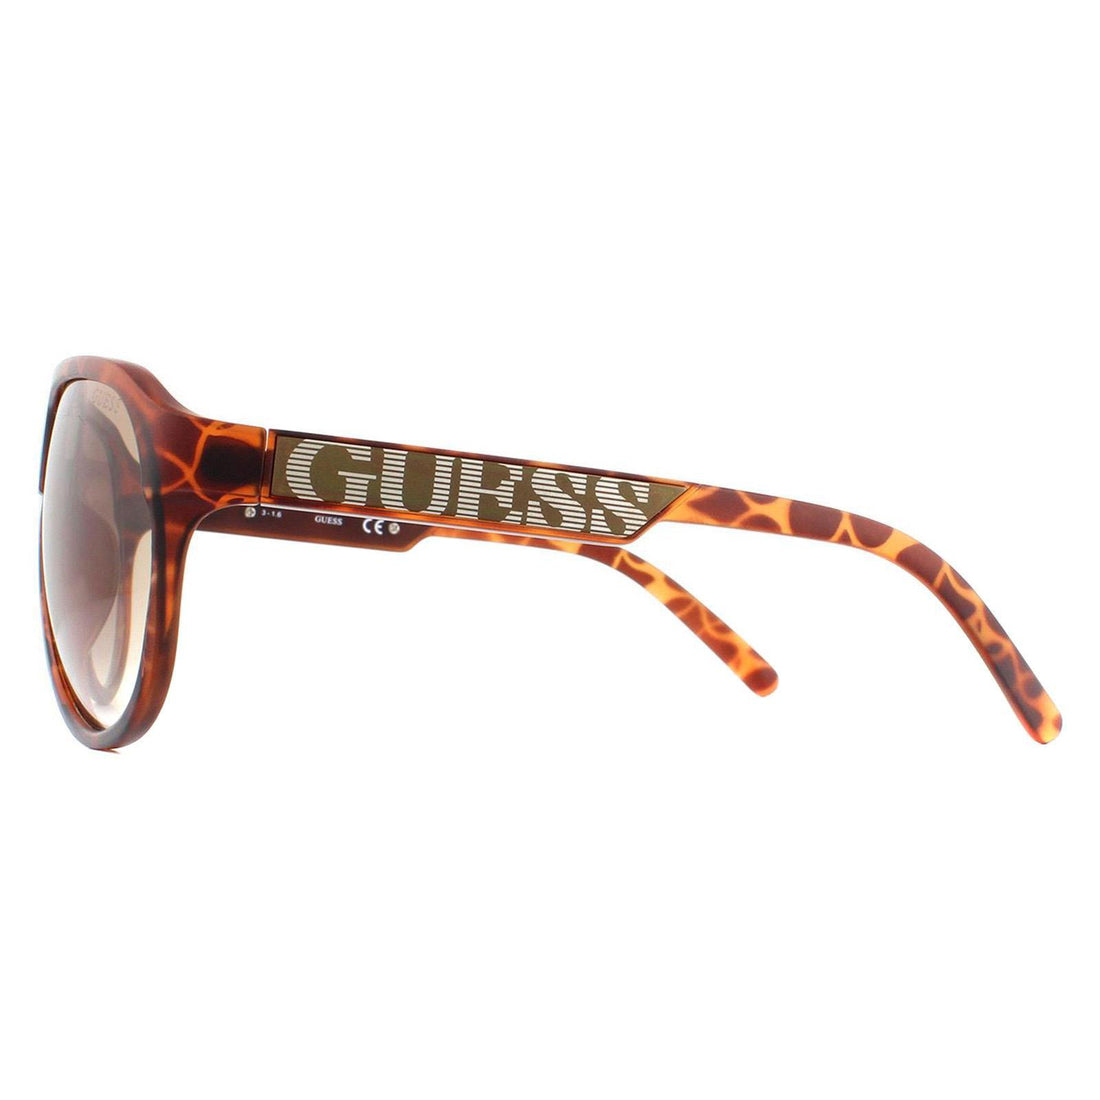 Guess Sunglasses GU6729 S57 Tortoise Brown Gradient